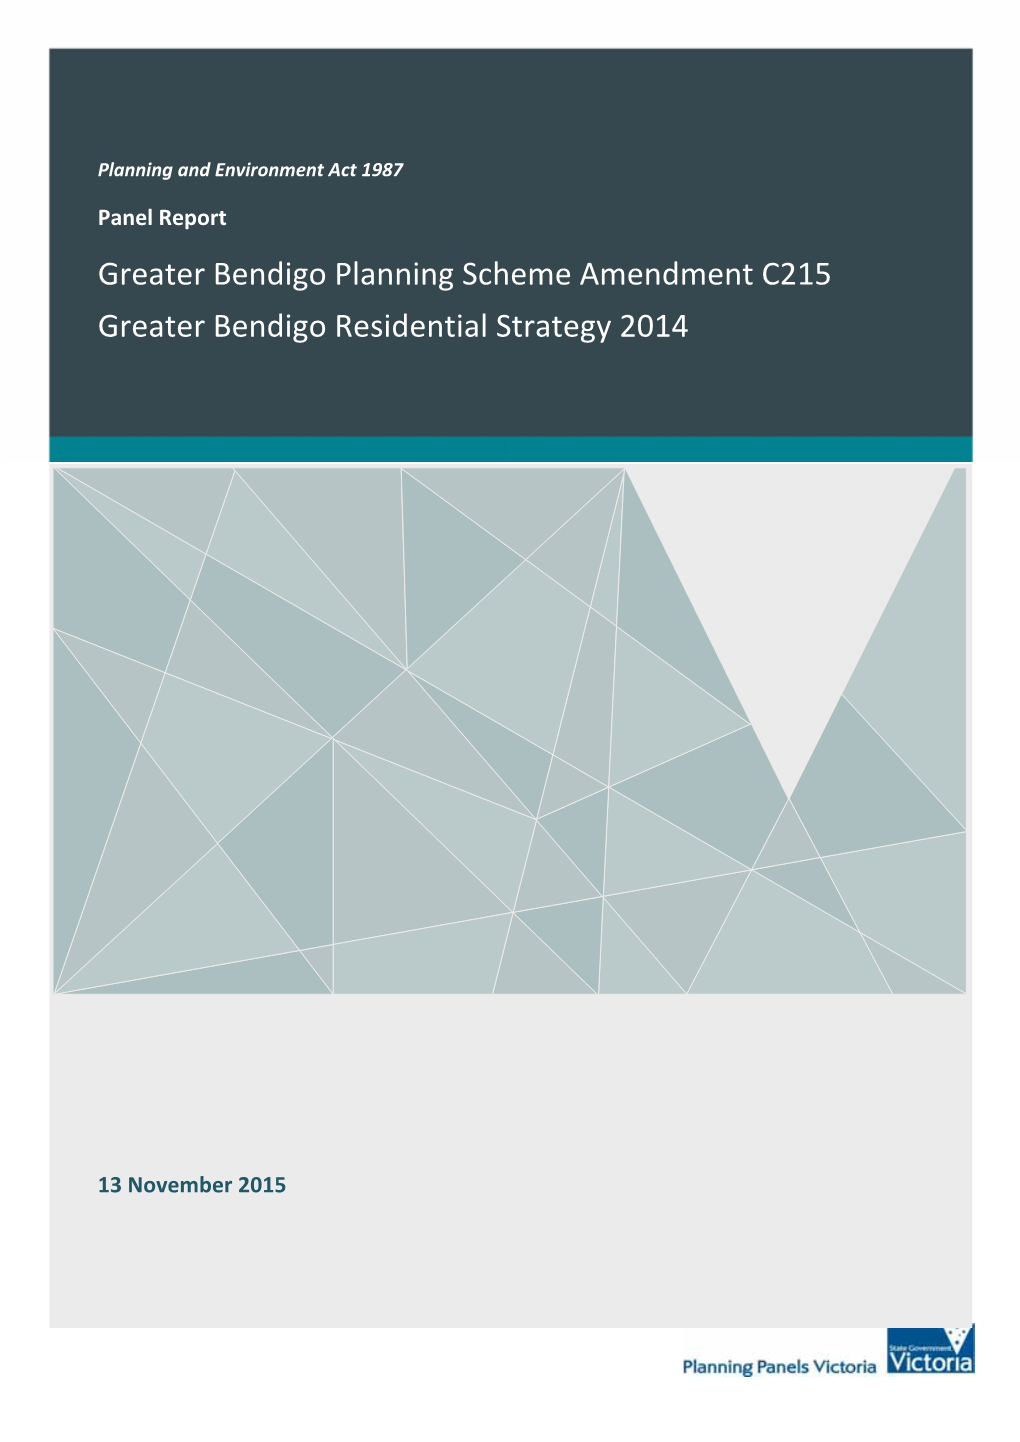 Greater Bendigo Planning Scheme Amendment C215 Greater Bendigo Residential Strategy 2014